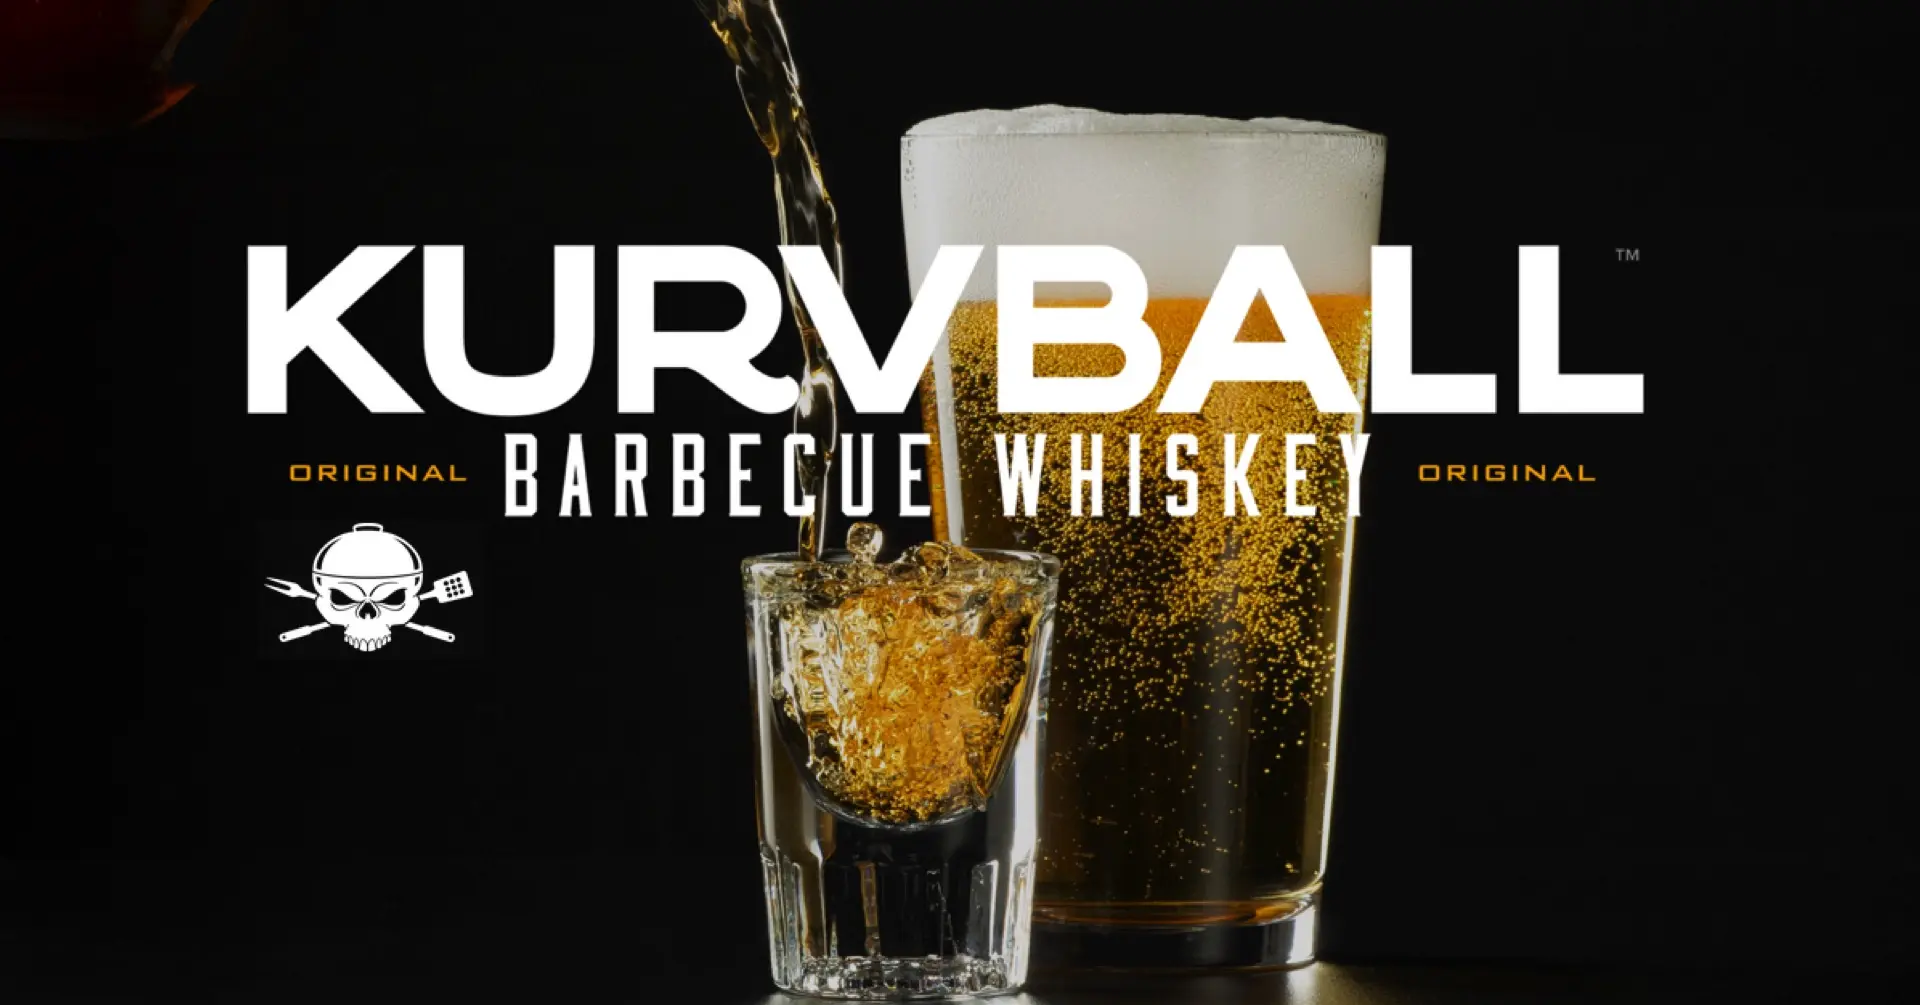 Kurvball BBQ Whiskey